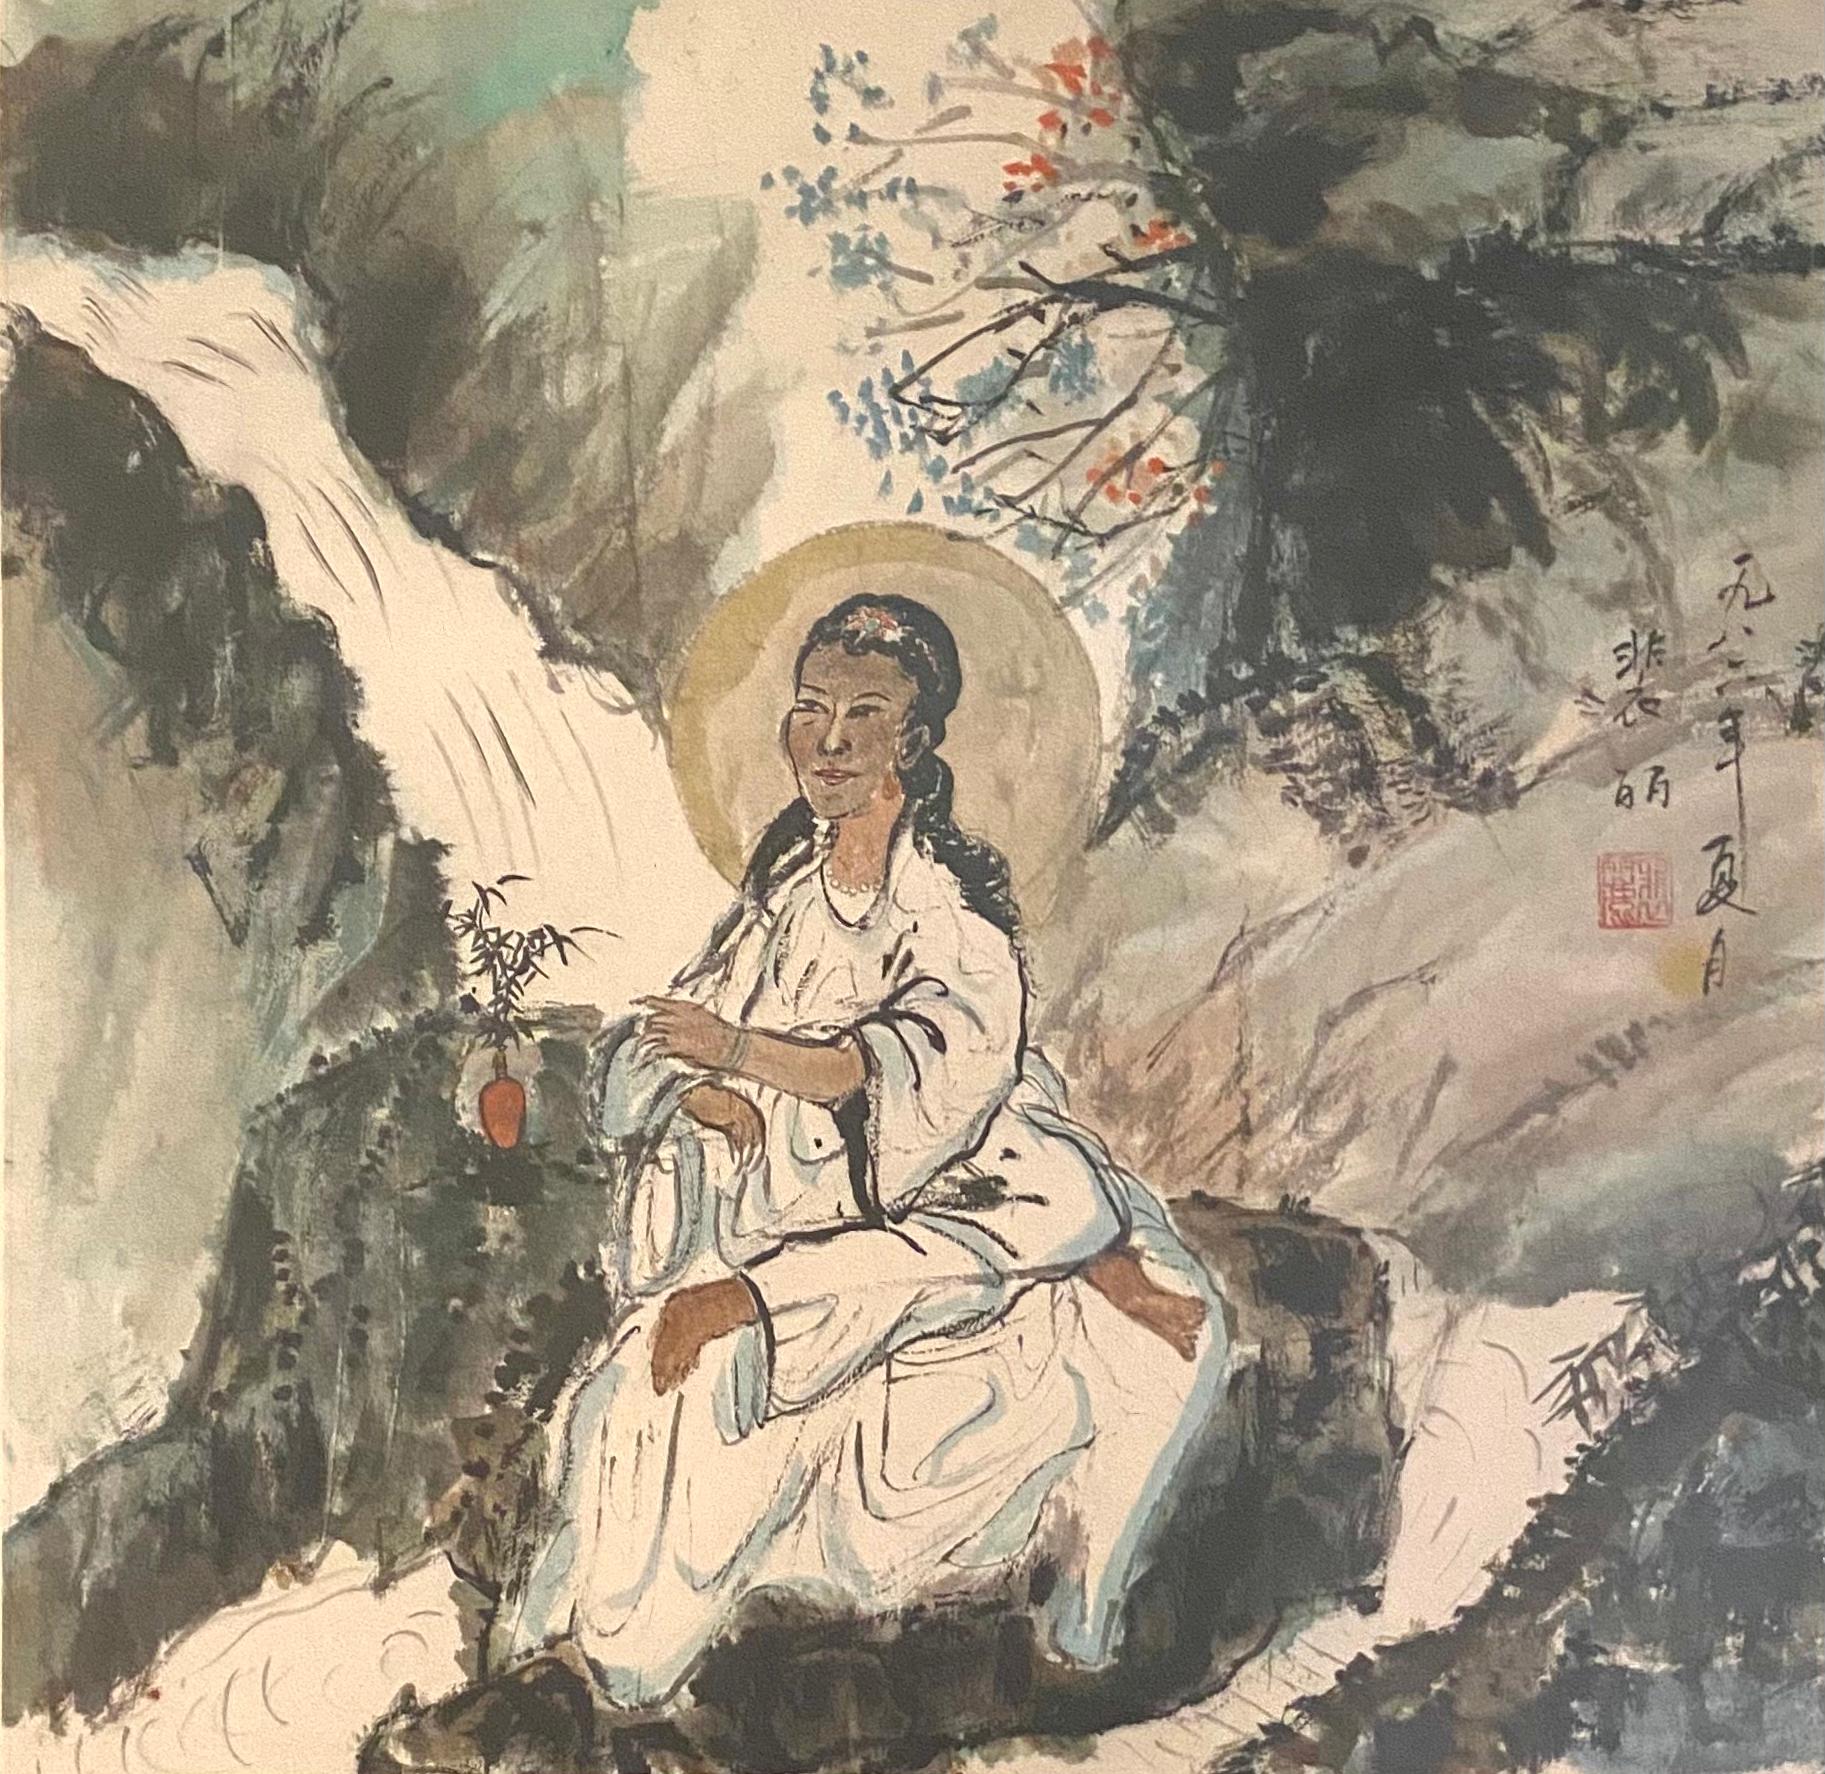 Fereshteh Stoecklein  Figurative Painting - Goddess contemporary Chinese ink and brush painting by Fereshteh Stoecklein